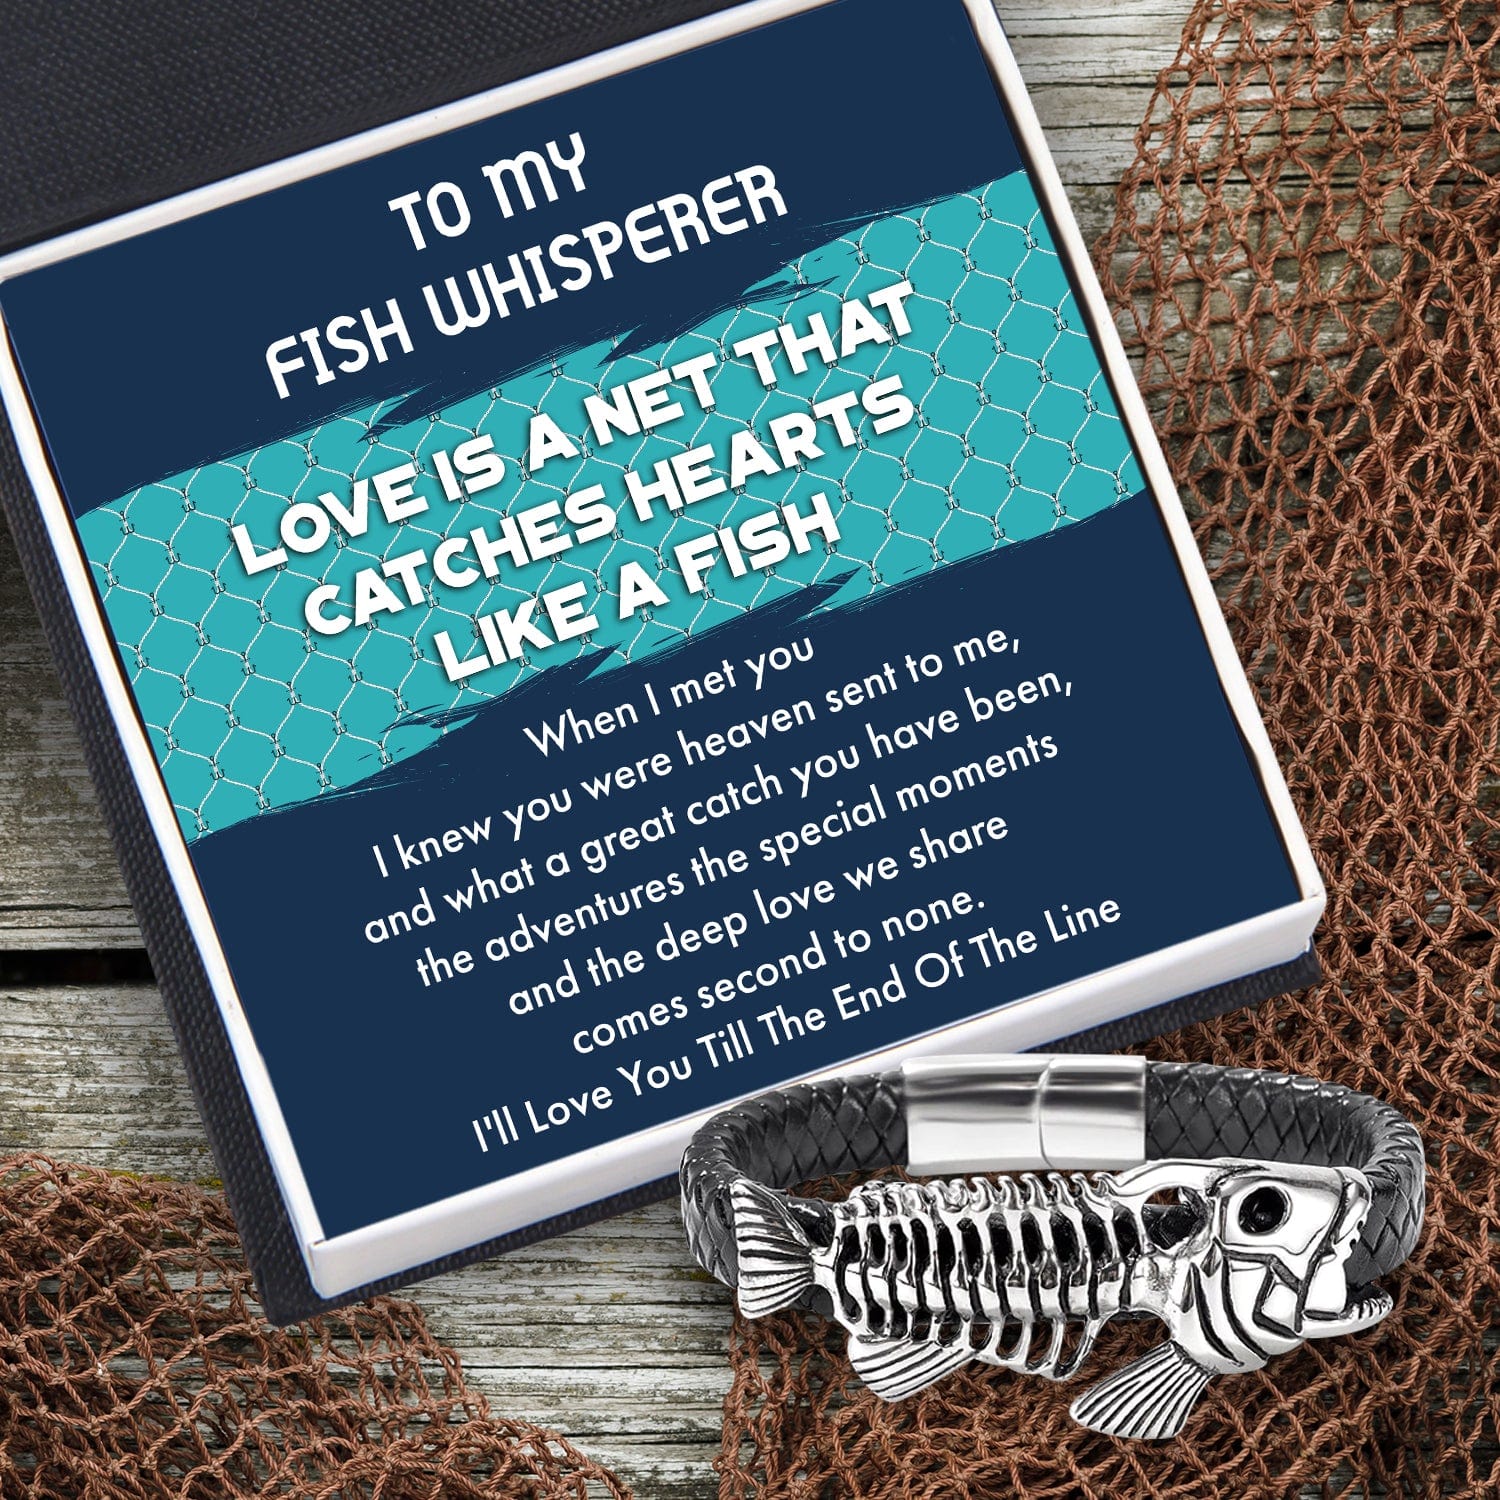 Black Leather Bracelet Fish Bone - Fishing - To My Fish Whisperer - I'll Love You Till The End Of The Line - Gbzr26002